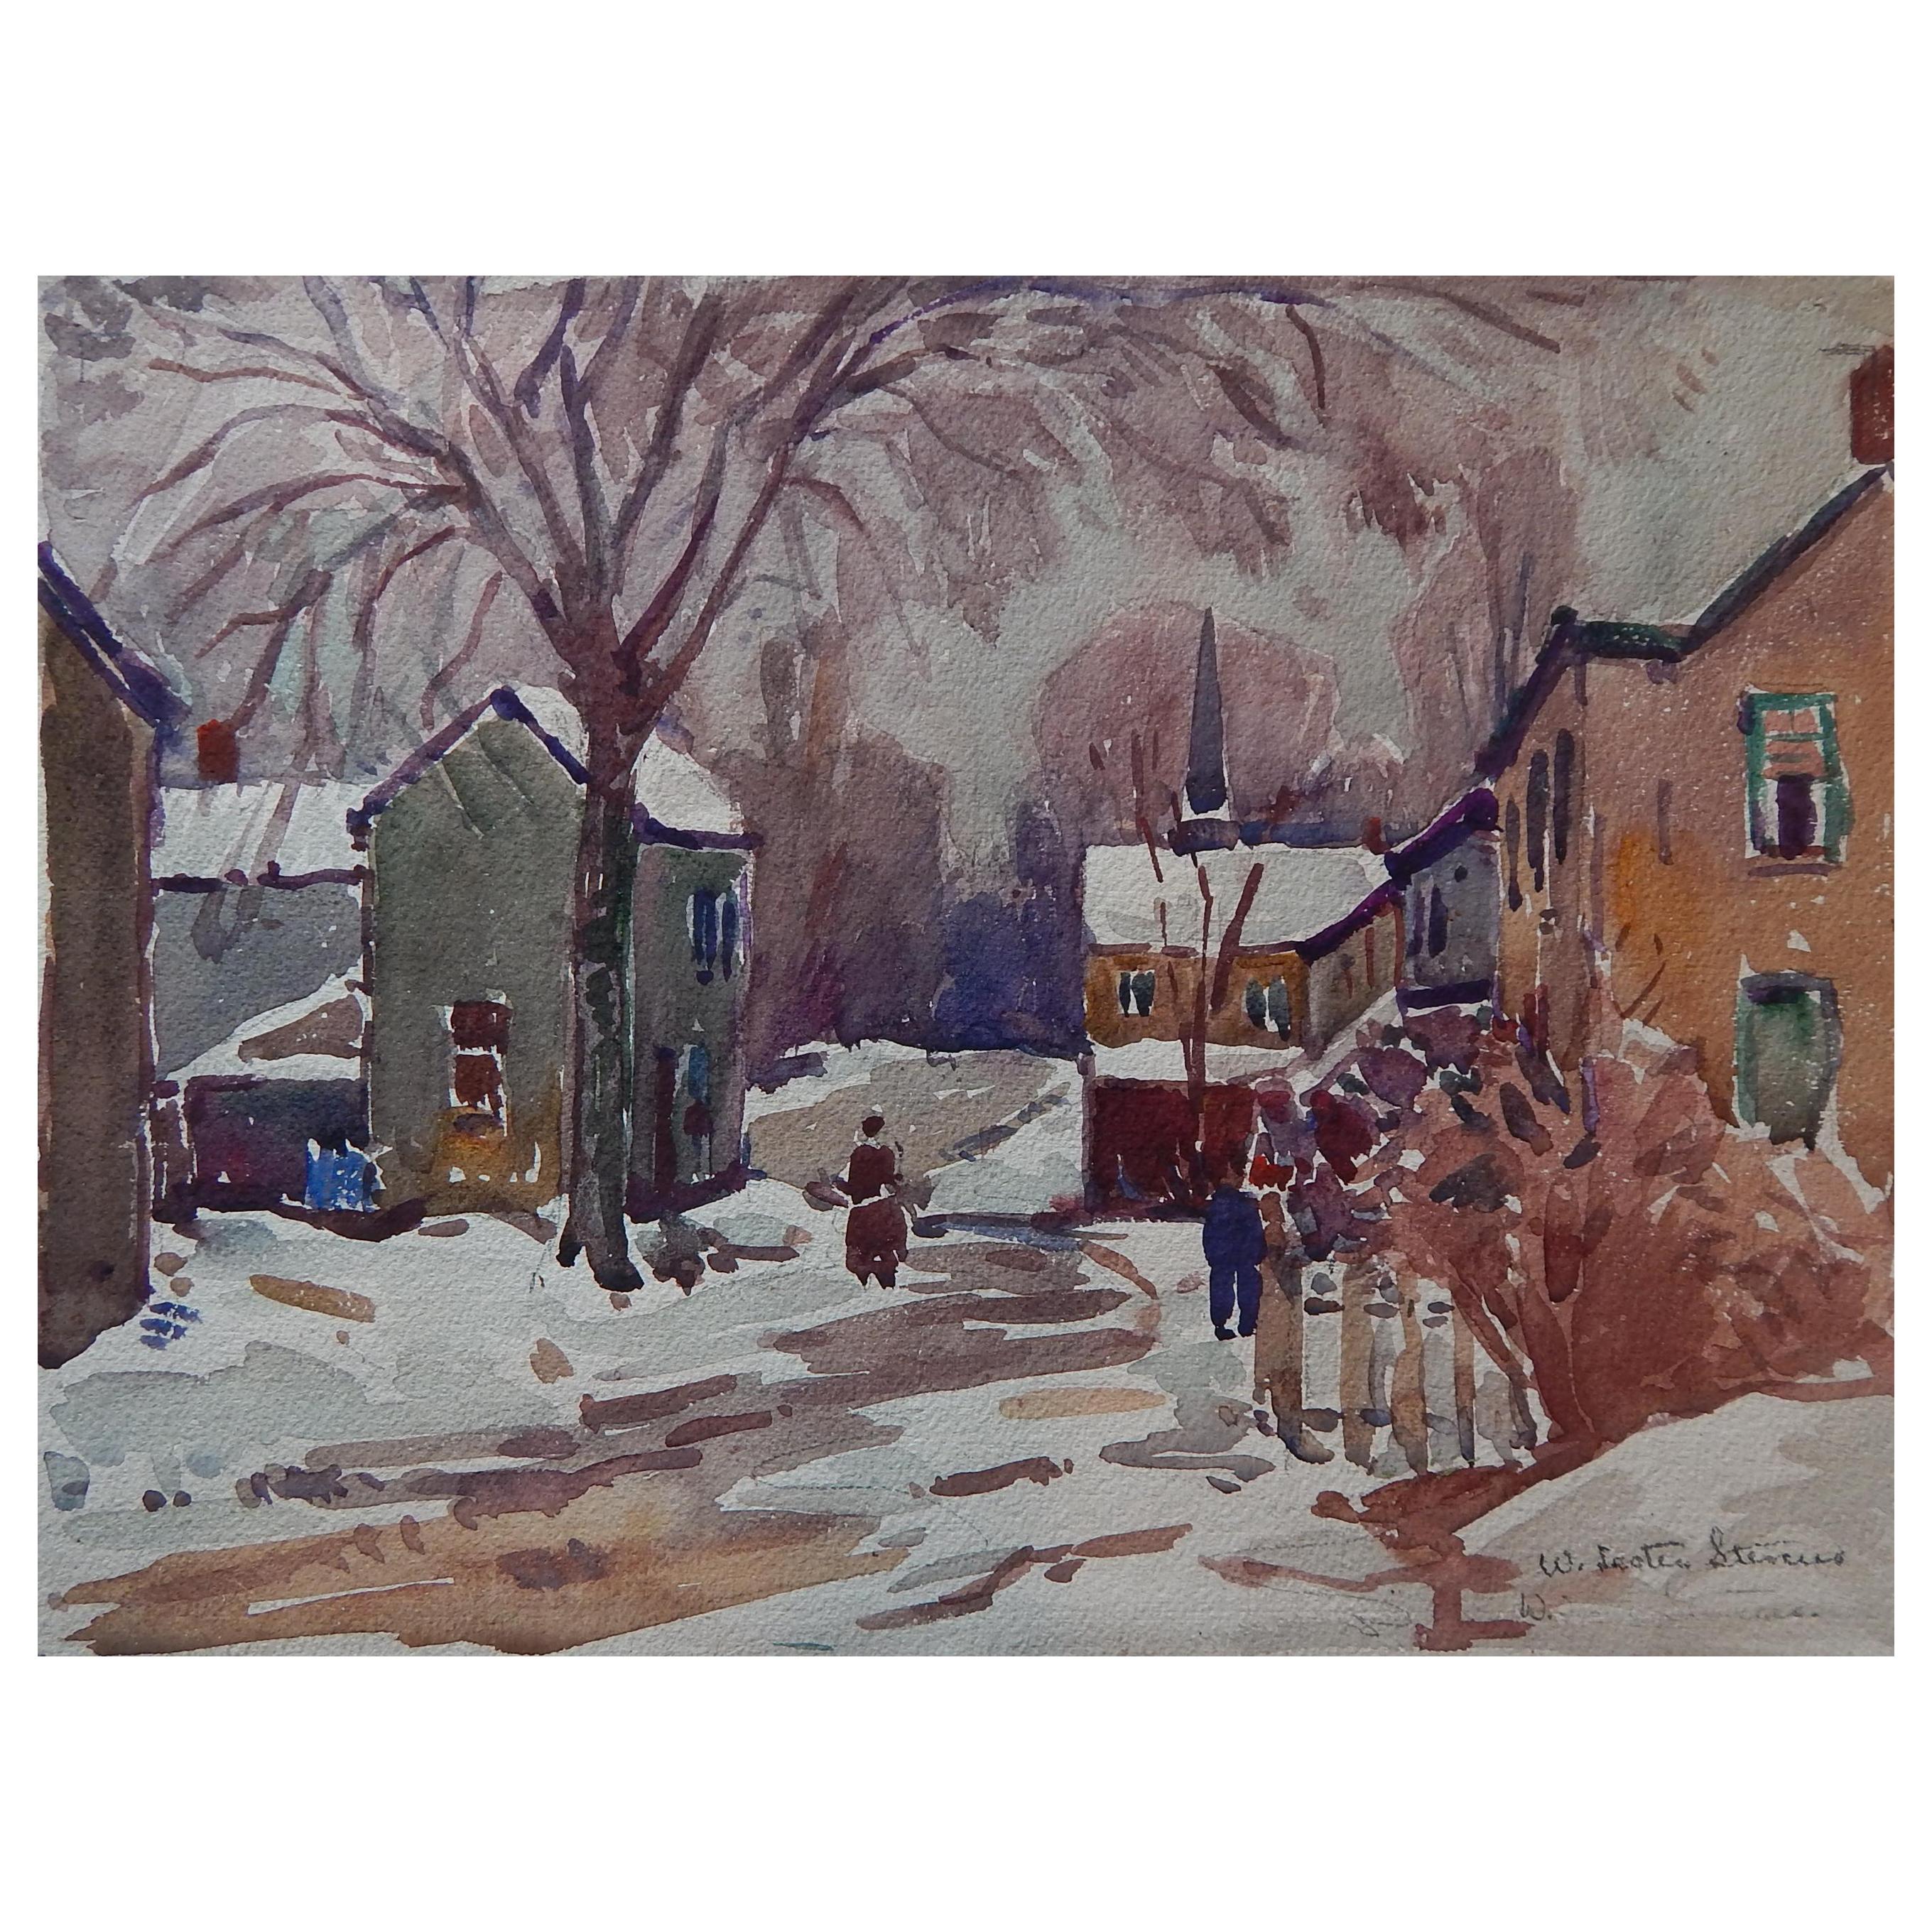 William Lester Stevens Watercolor, circa 1920s-1930s New England Village in Snow